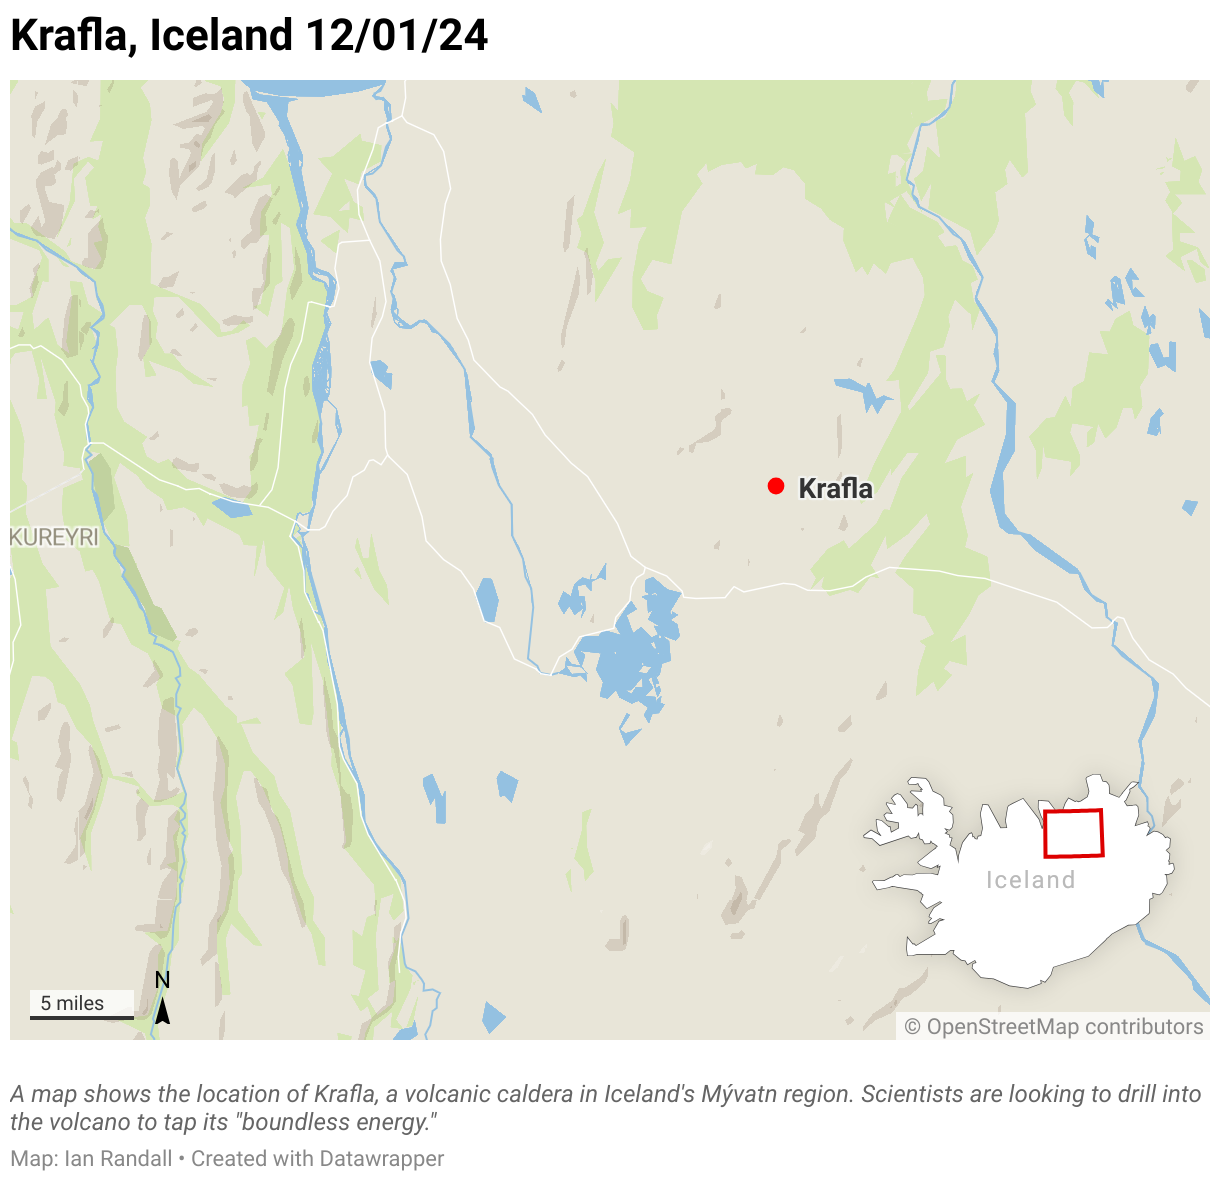 A map shows the location of Krafla, a volcanic caldera in Iceland's Mývatn region.